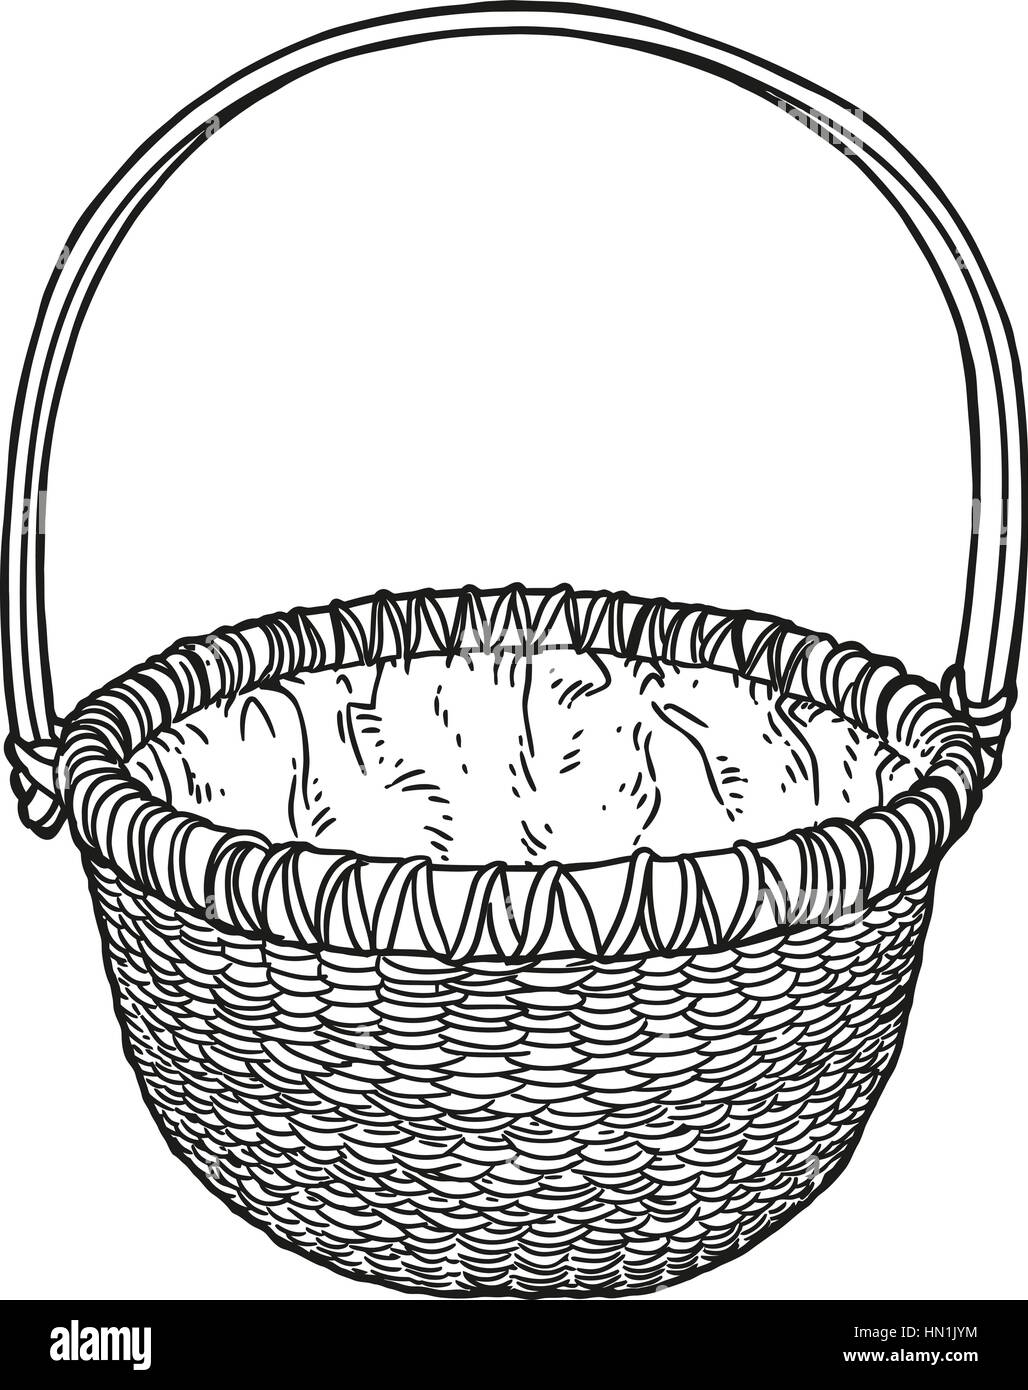 Basket illustration, drawing, engraving Stock Vector